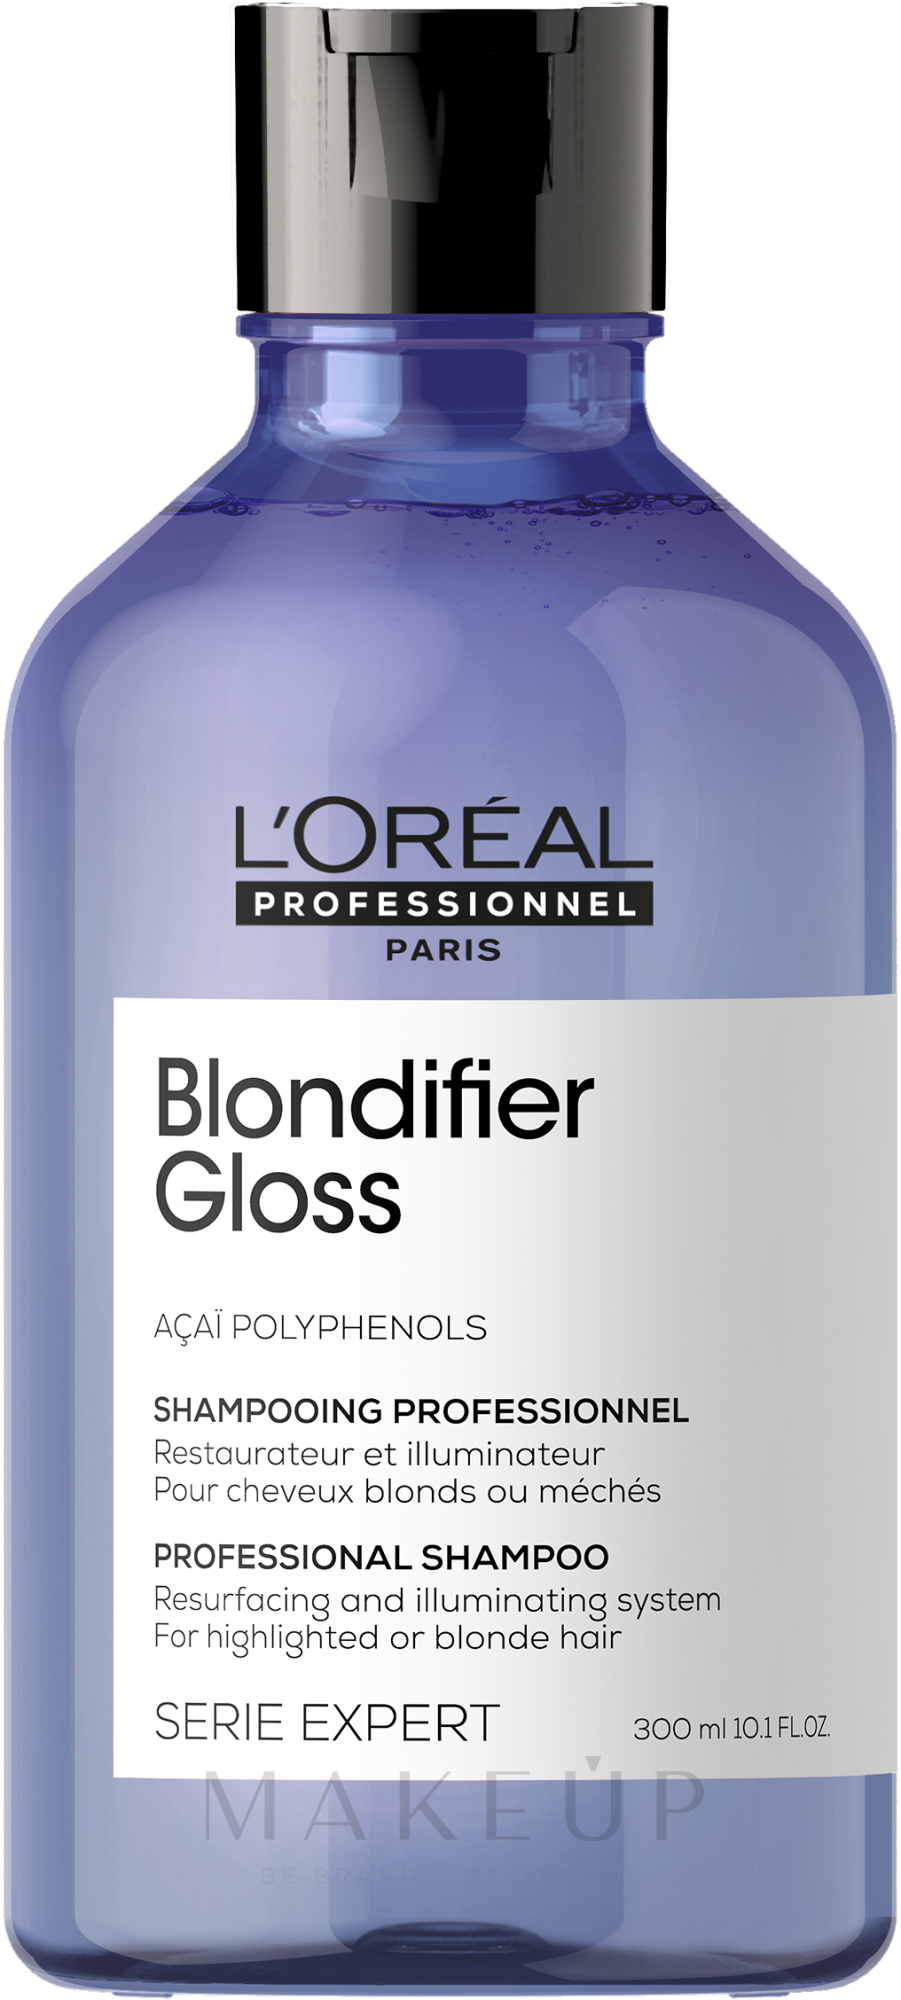 Wiederaufbauendes Gloss Shampoo für blondiertes Haar - L'Oreal Professionnel Serie Expert Blondifier Gloss Shampoo — Bild 300 ml NEW